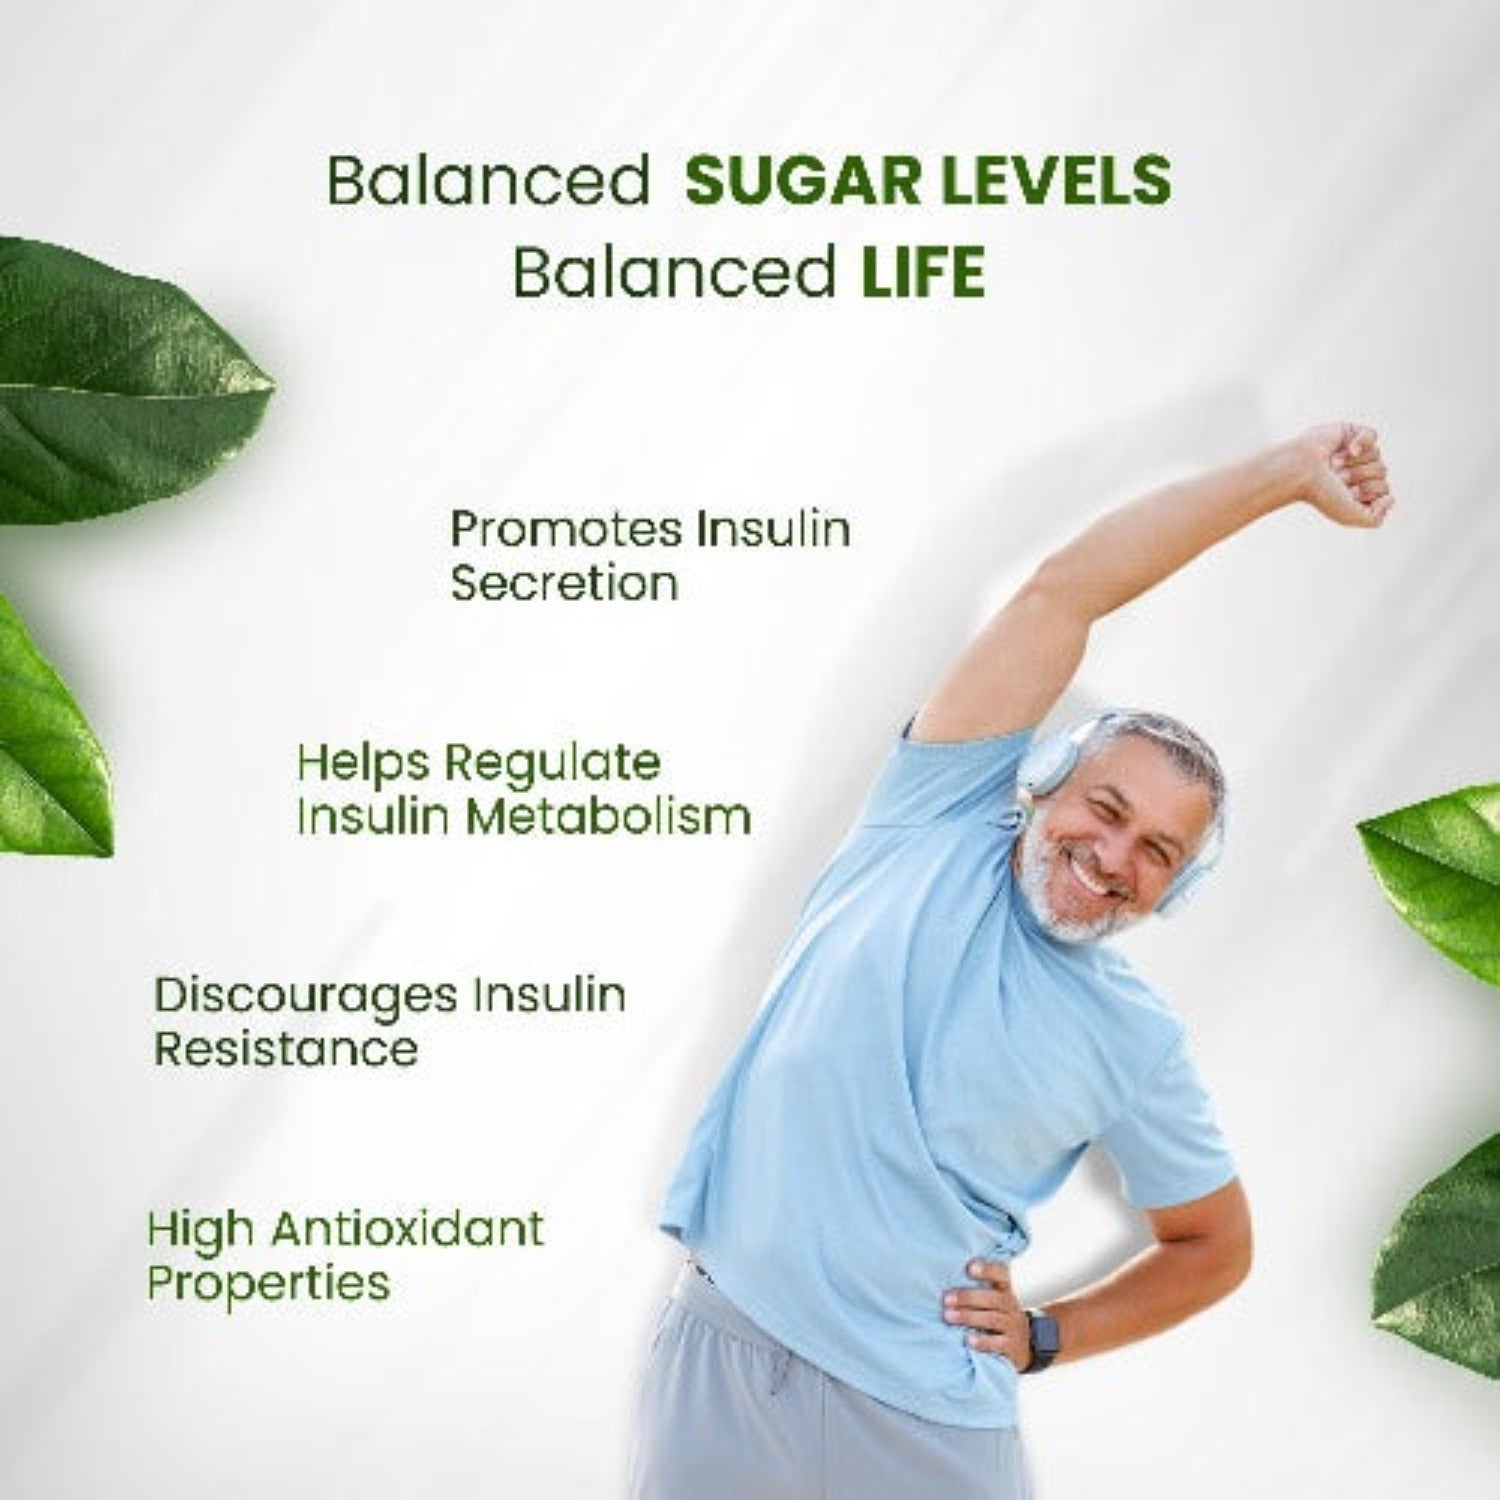 Himalayan Organics Diabetes Support Supplement Helps Control Blood Sugar Levels 100% Vegetarian (60 Capsules)